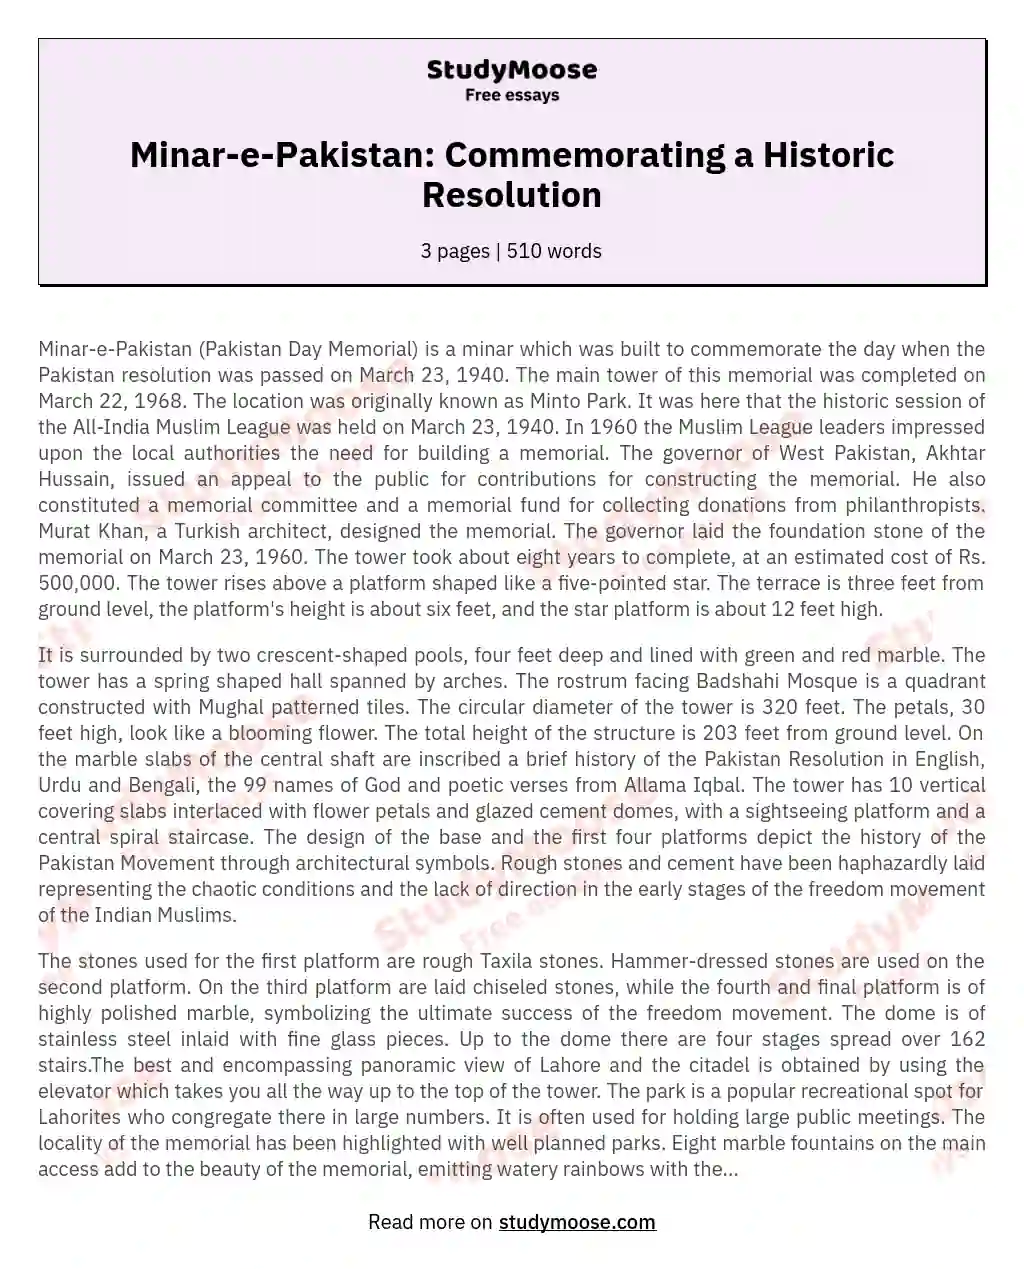 Minar-e-Pakistan: Commemorating a Historic Resolution essay